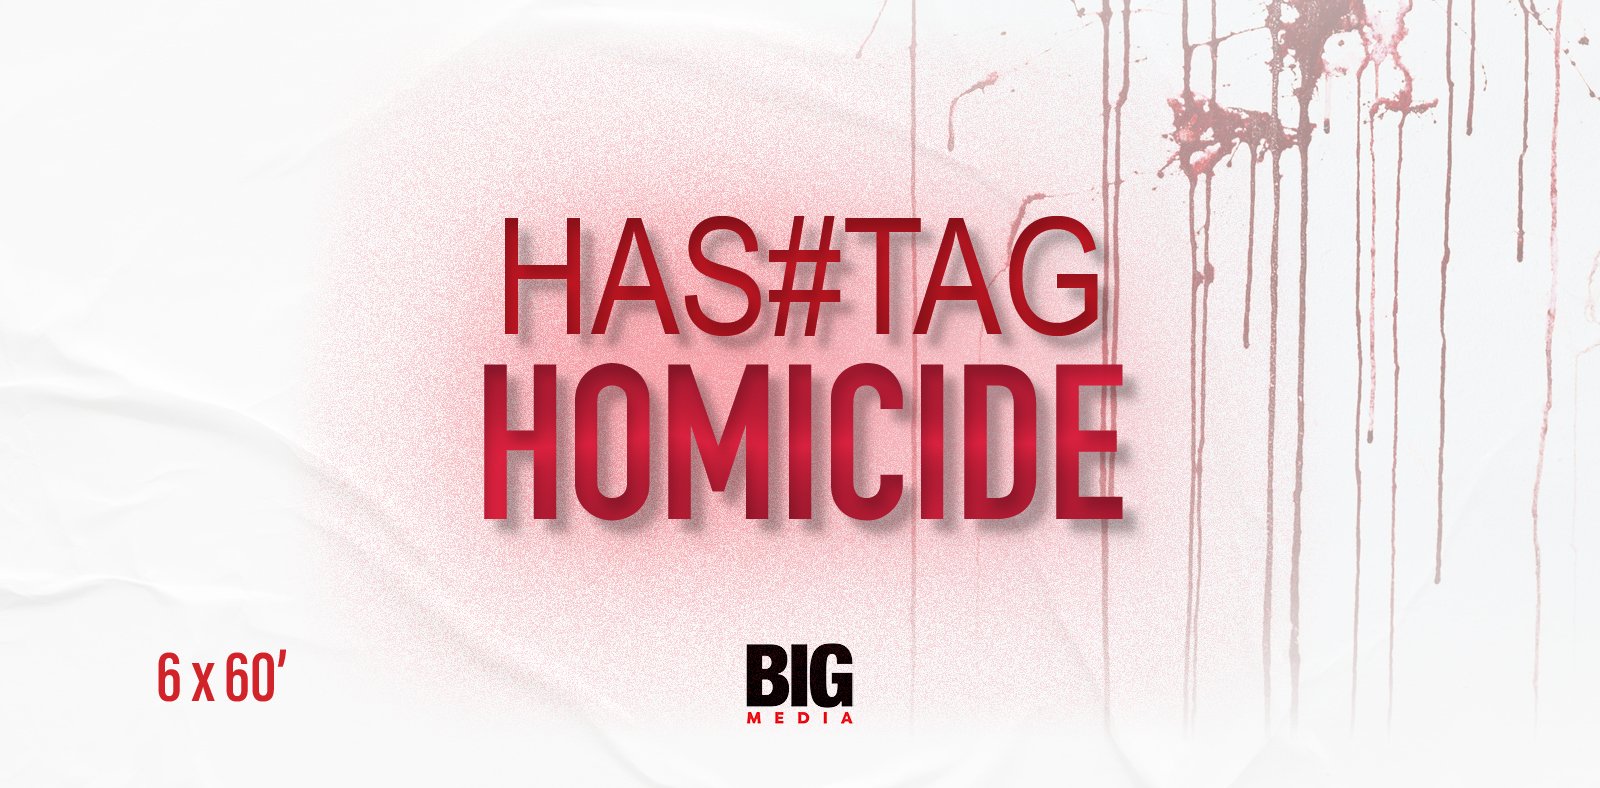 Hashtag_Homicide_Treatment_V37.jpg